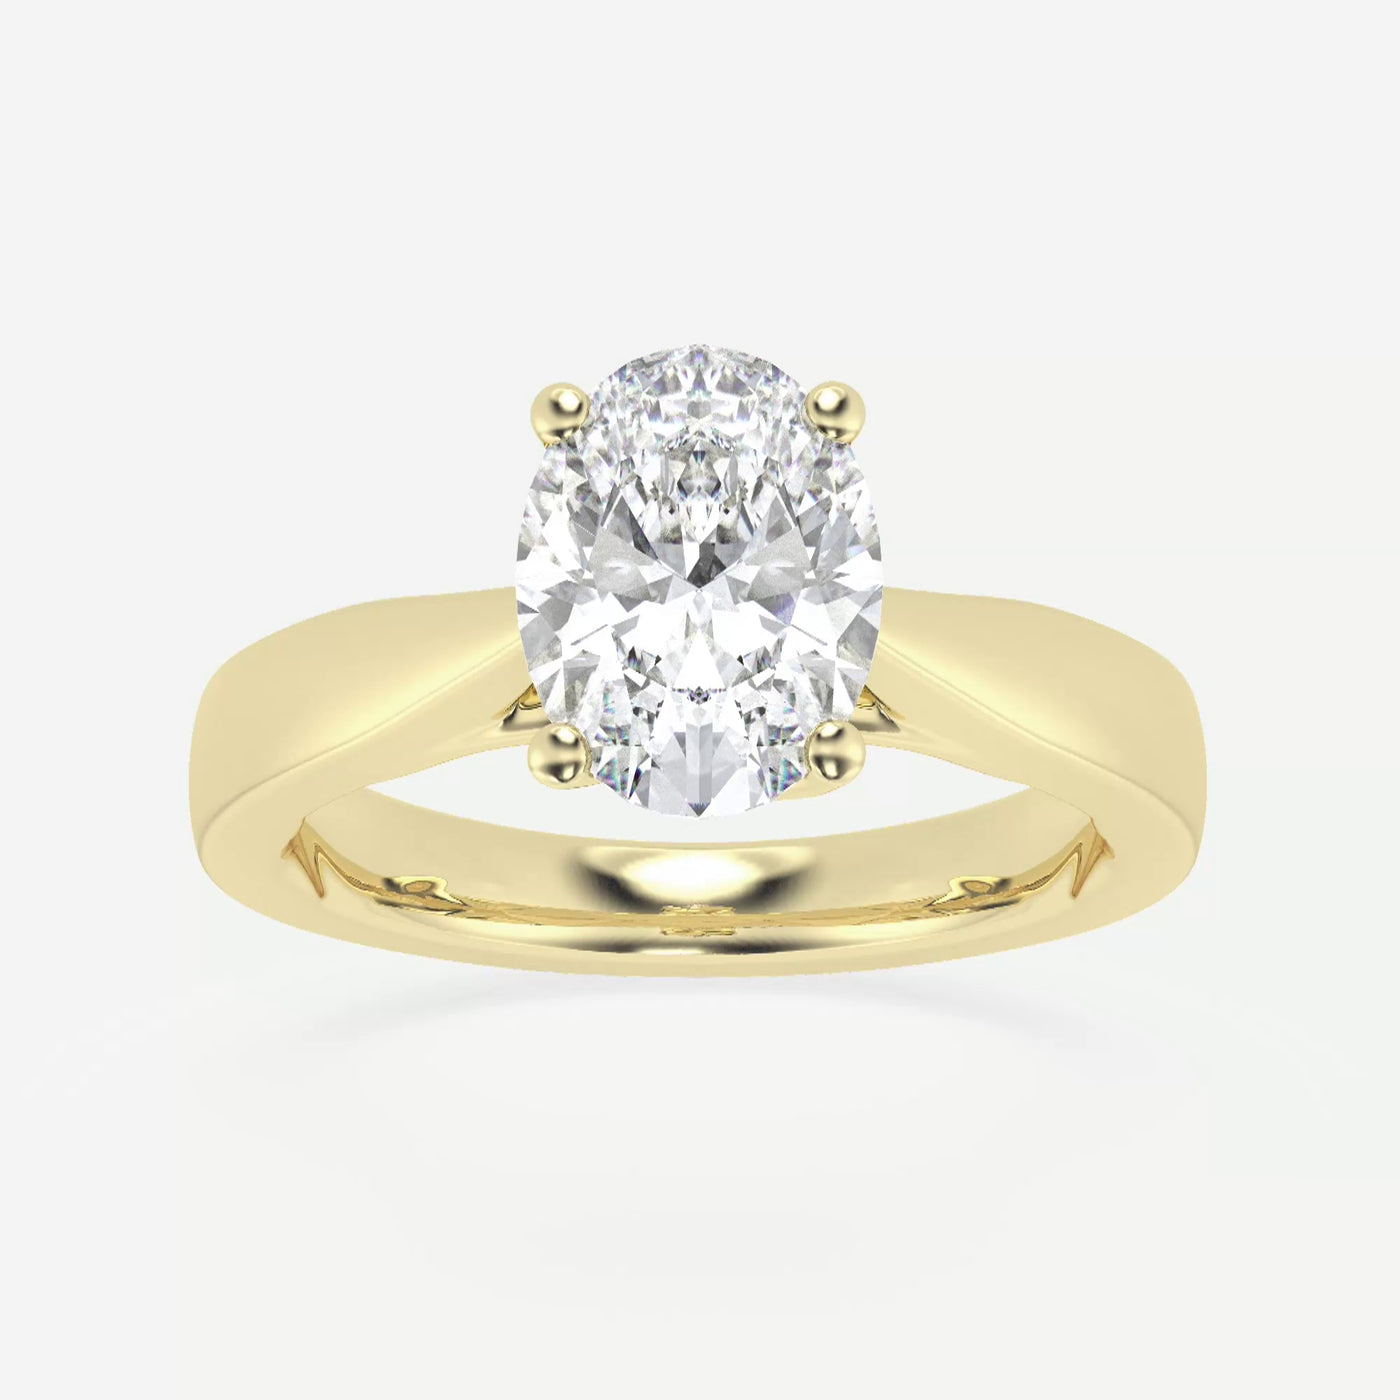 _main_image@SKU:LGD-TXR01767-GY4~#carat_2.00#diamond-quality_fg,-vs2+#metal_18k-yellow-gold